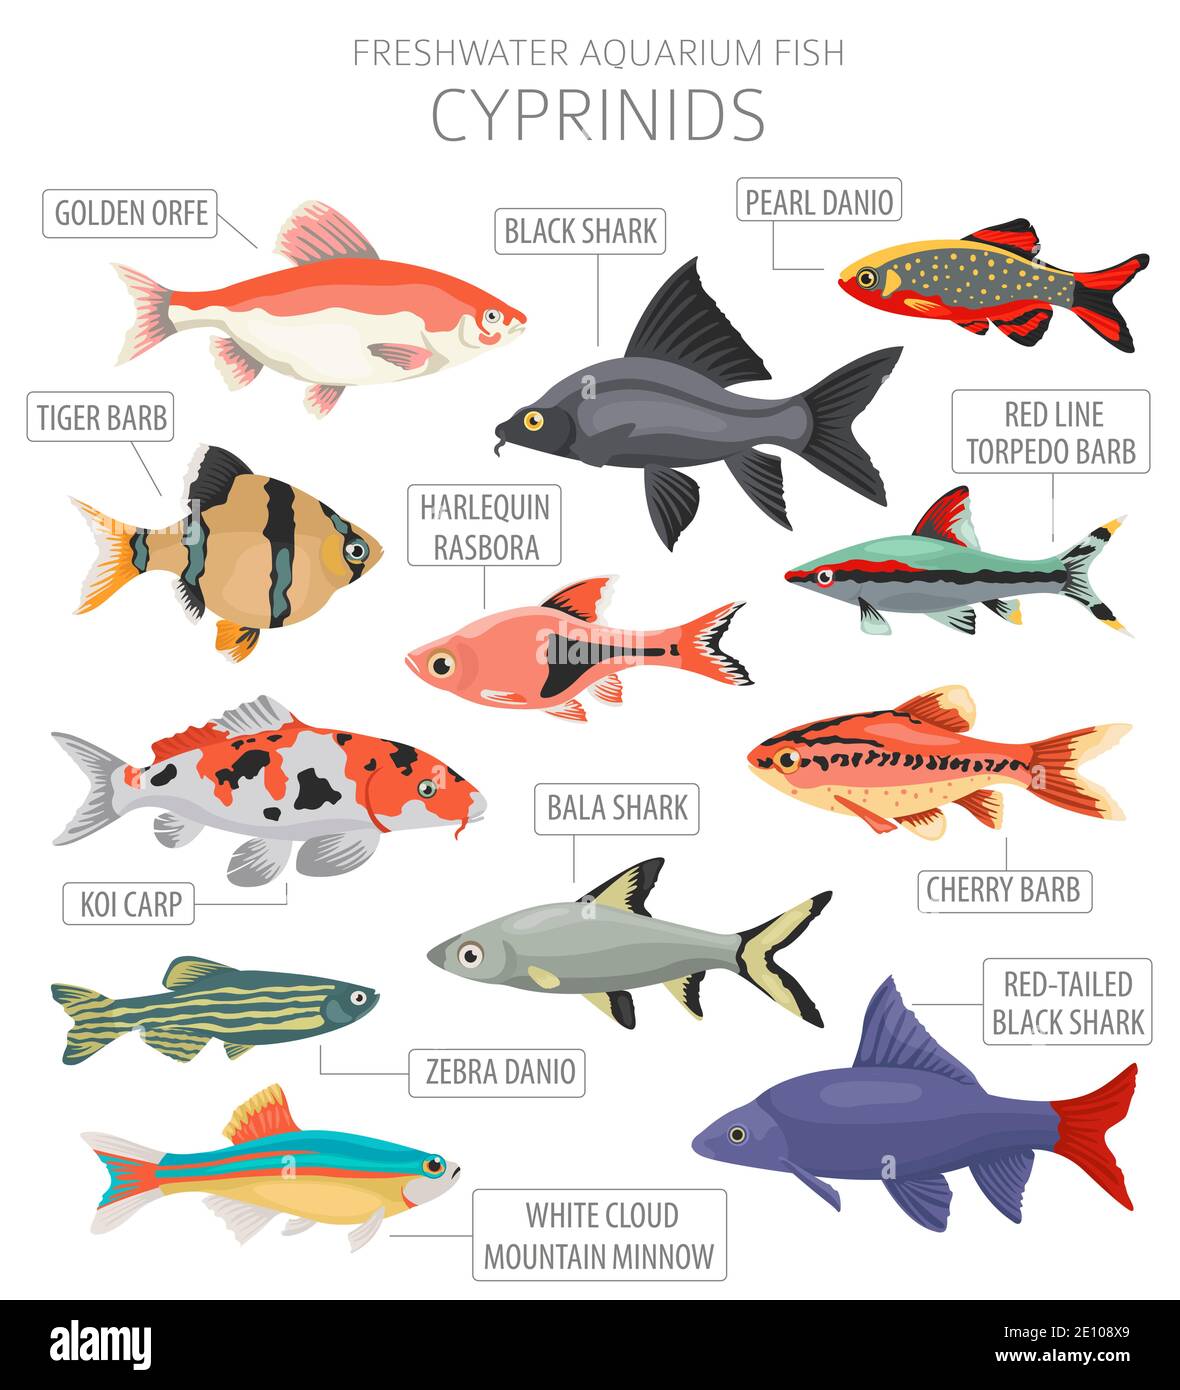 Cyprinids. Freshwater aquarium fish icon set flat style isolated on white.  Vector illustration Stock Vector